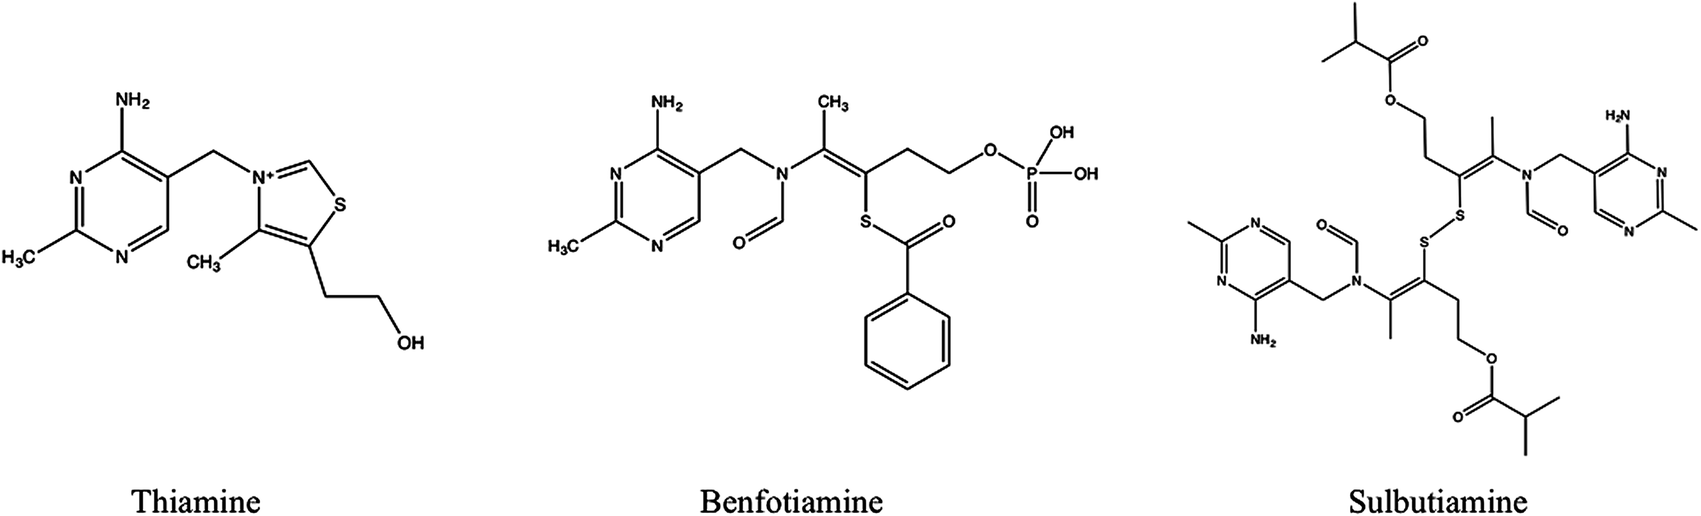 Image result for benfotiamine